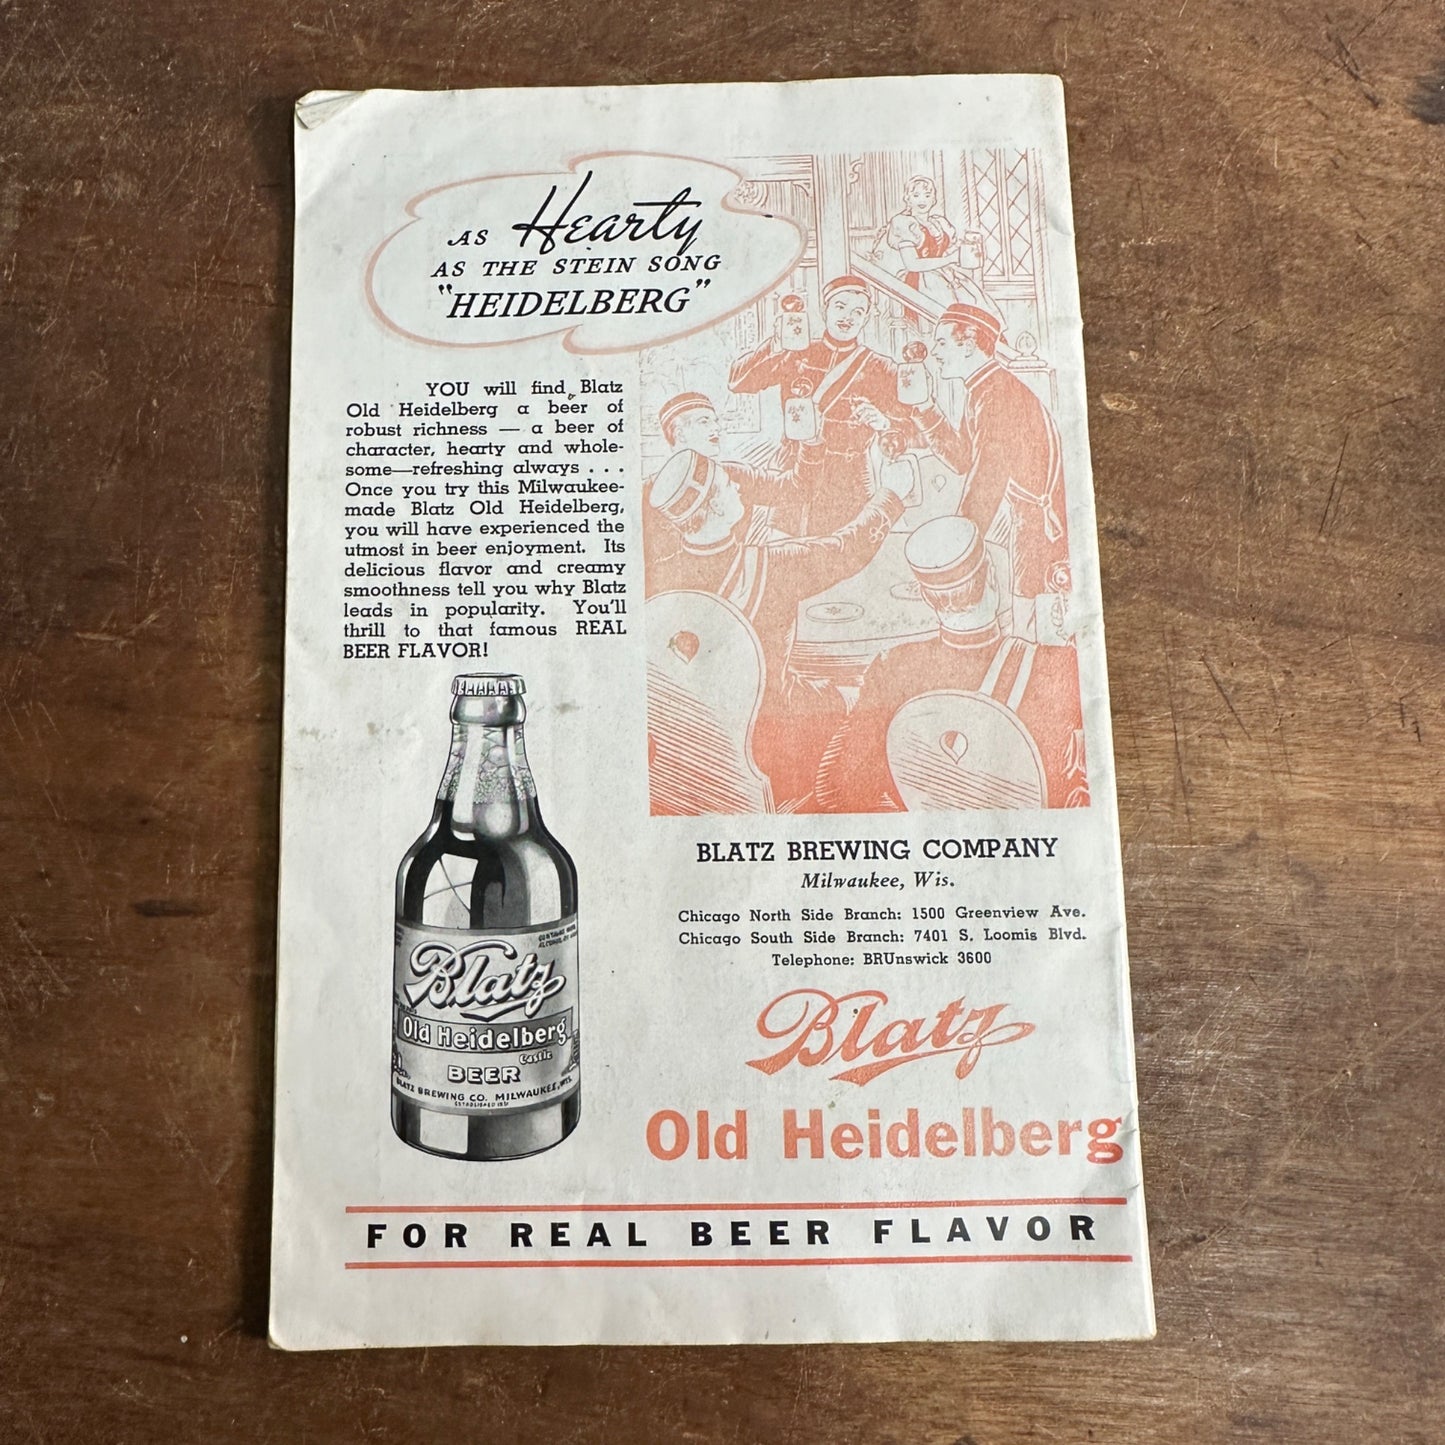 1930S SOUVENIR SONG BOOK EITEL'S OLD HEIDELBERG INN  BLATZ CHICAGO